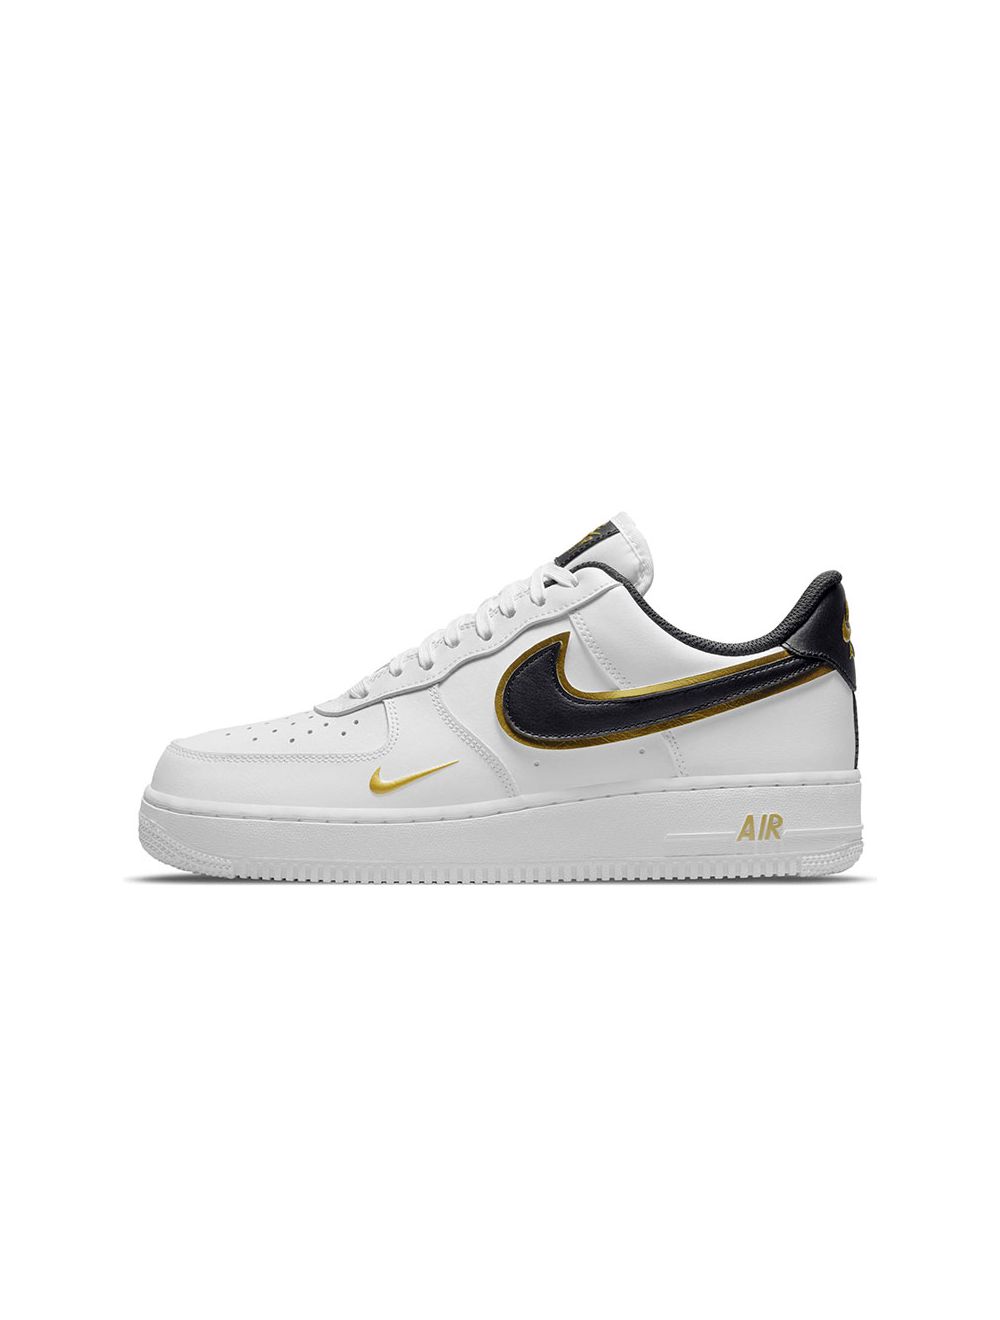 Buy Nike Air Force 1 '07 LV8 Mens Sneaker White Metallic Gold Black ...